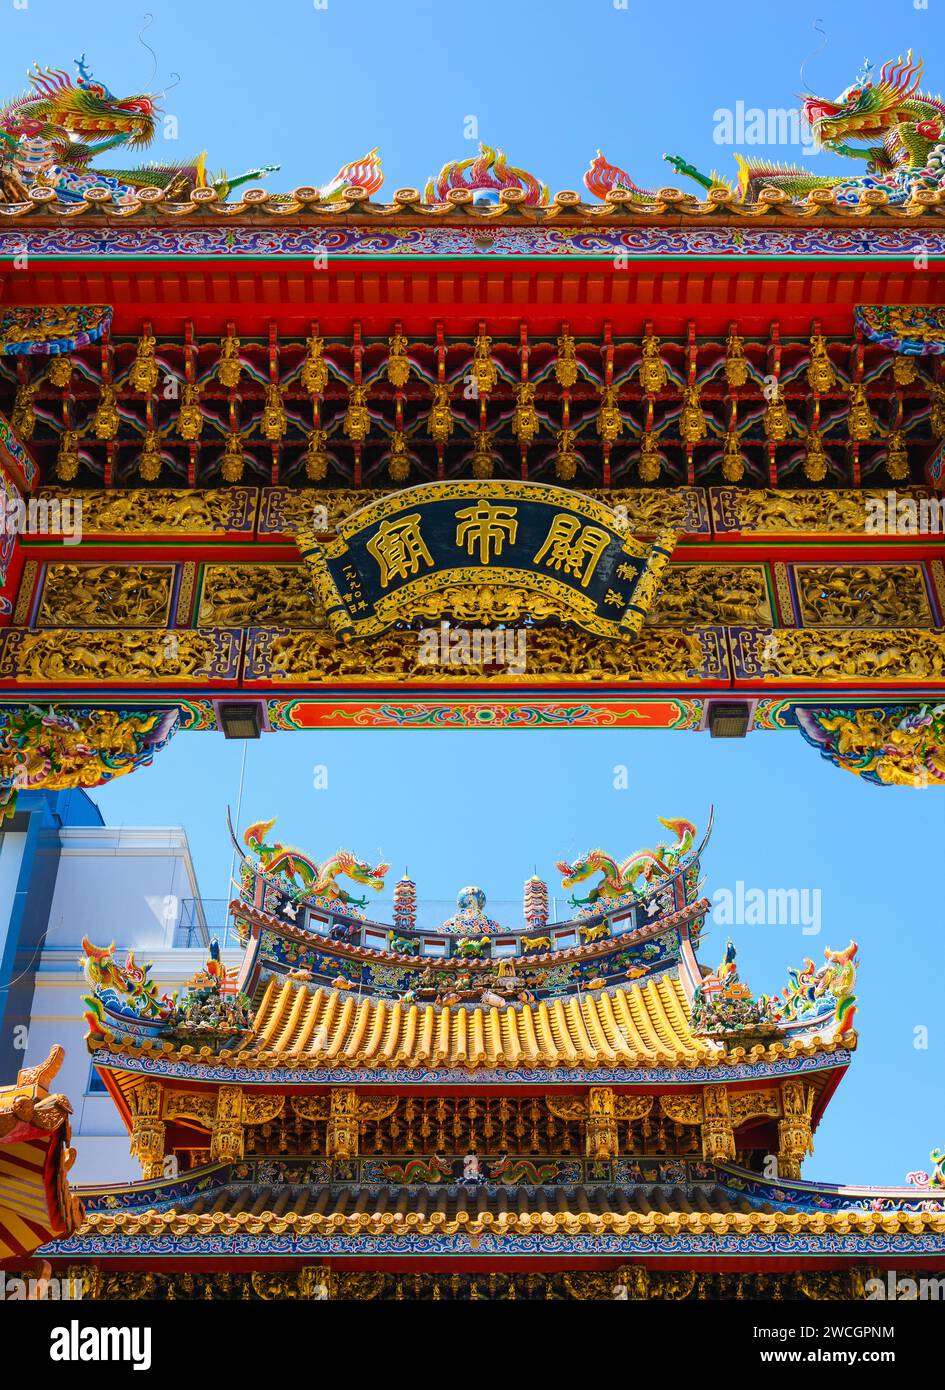 Colorful Chinese temple in Yokohama China town, Japan Stock Photo